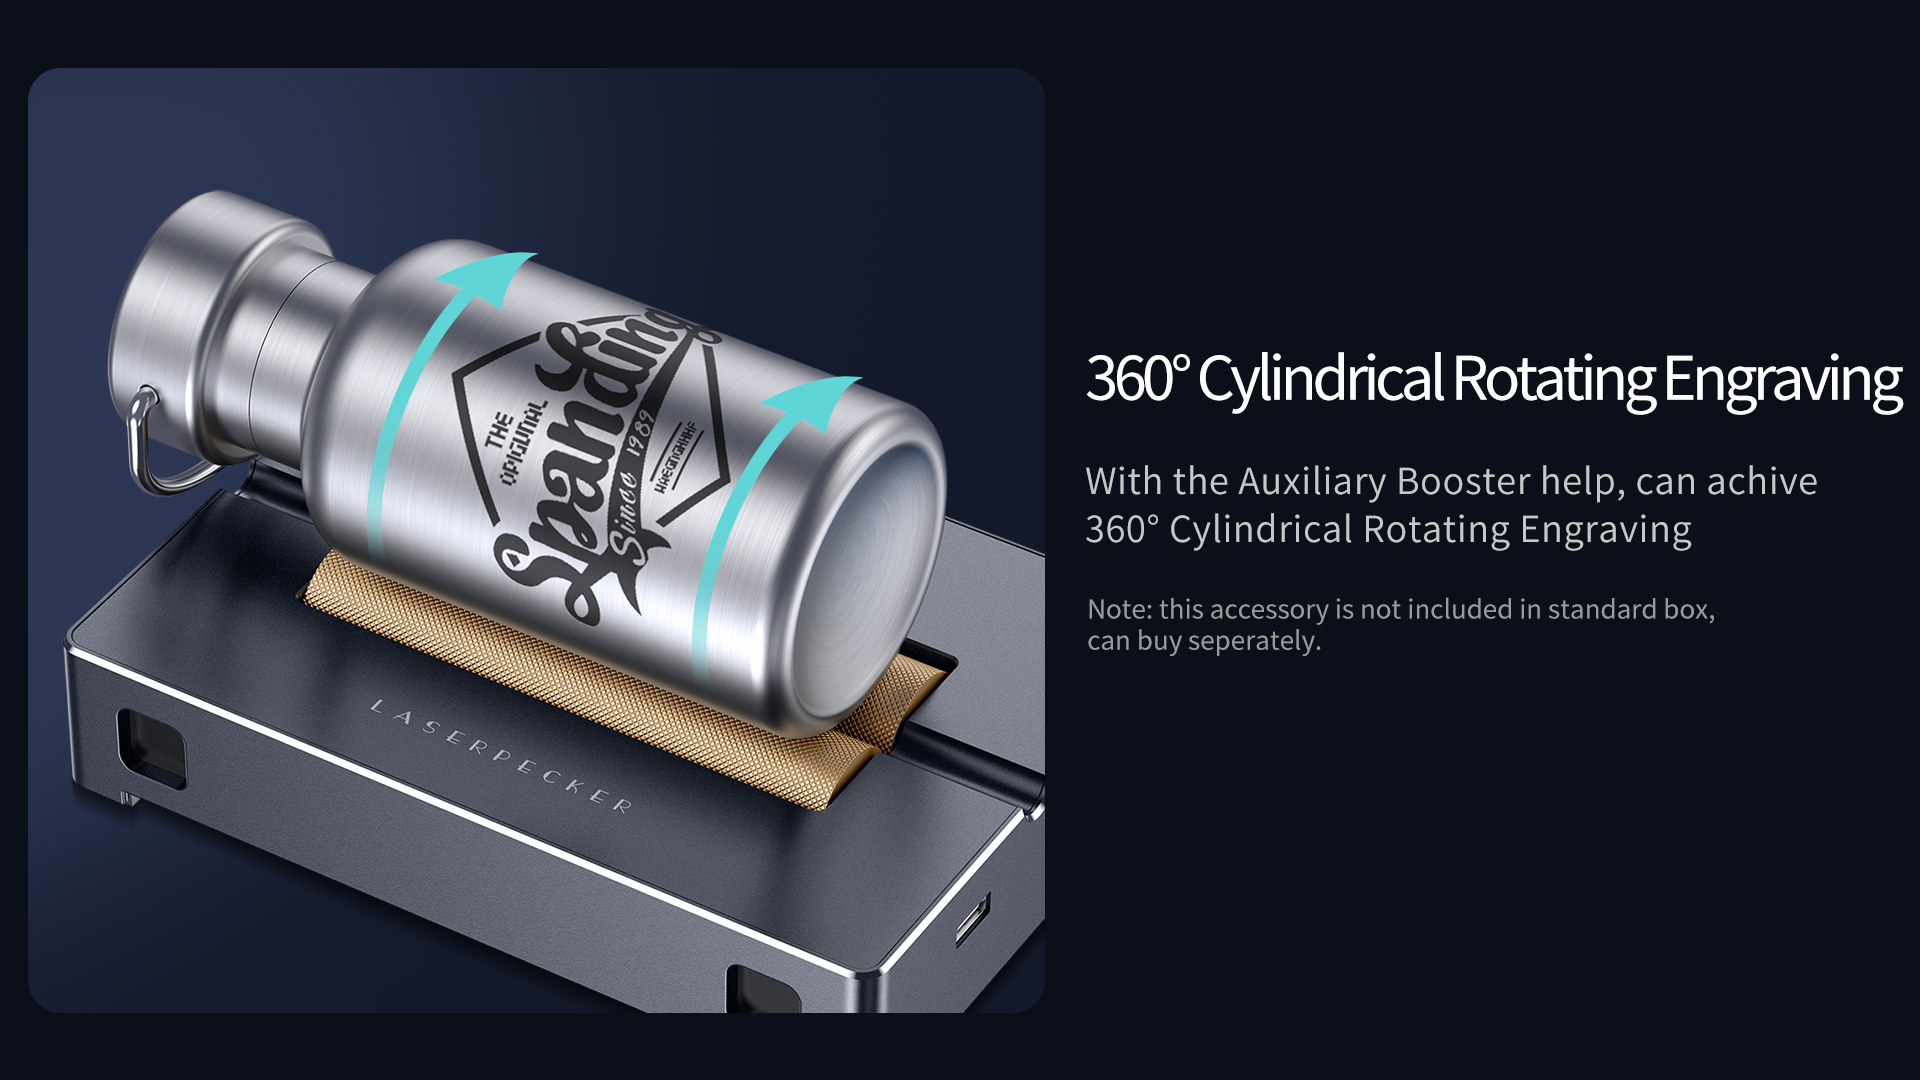 Laserpecker 3 handheld fiber laser engraver with 360° cylindrical rotating engraving